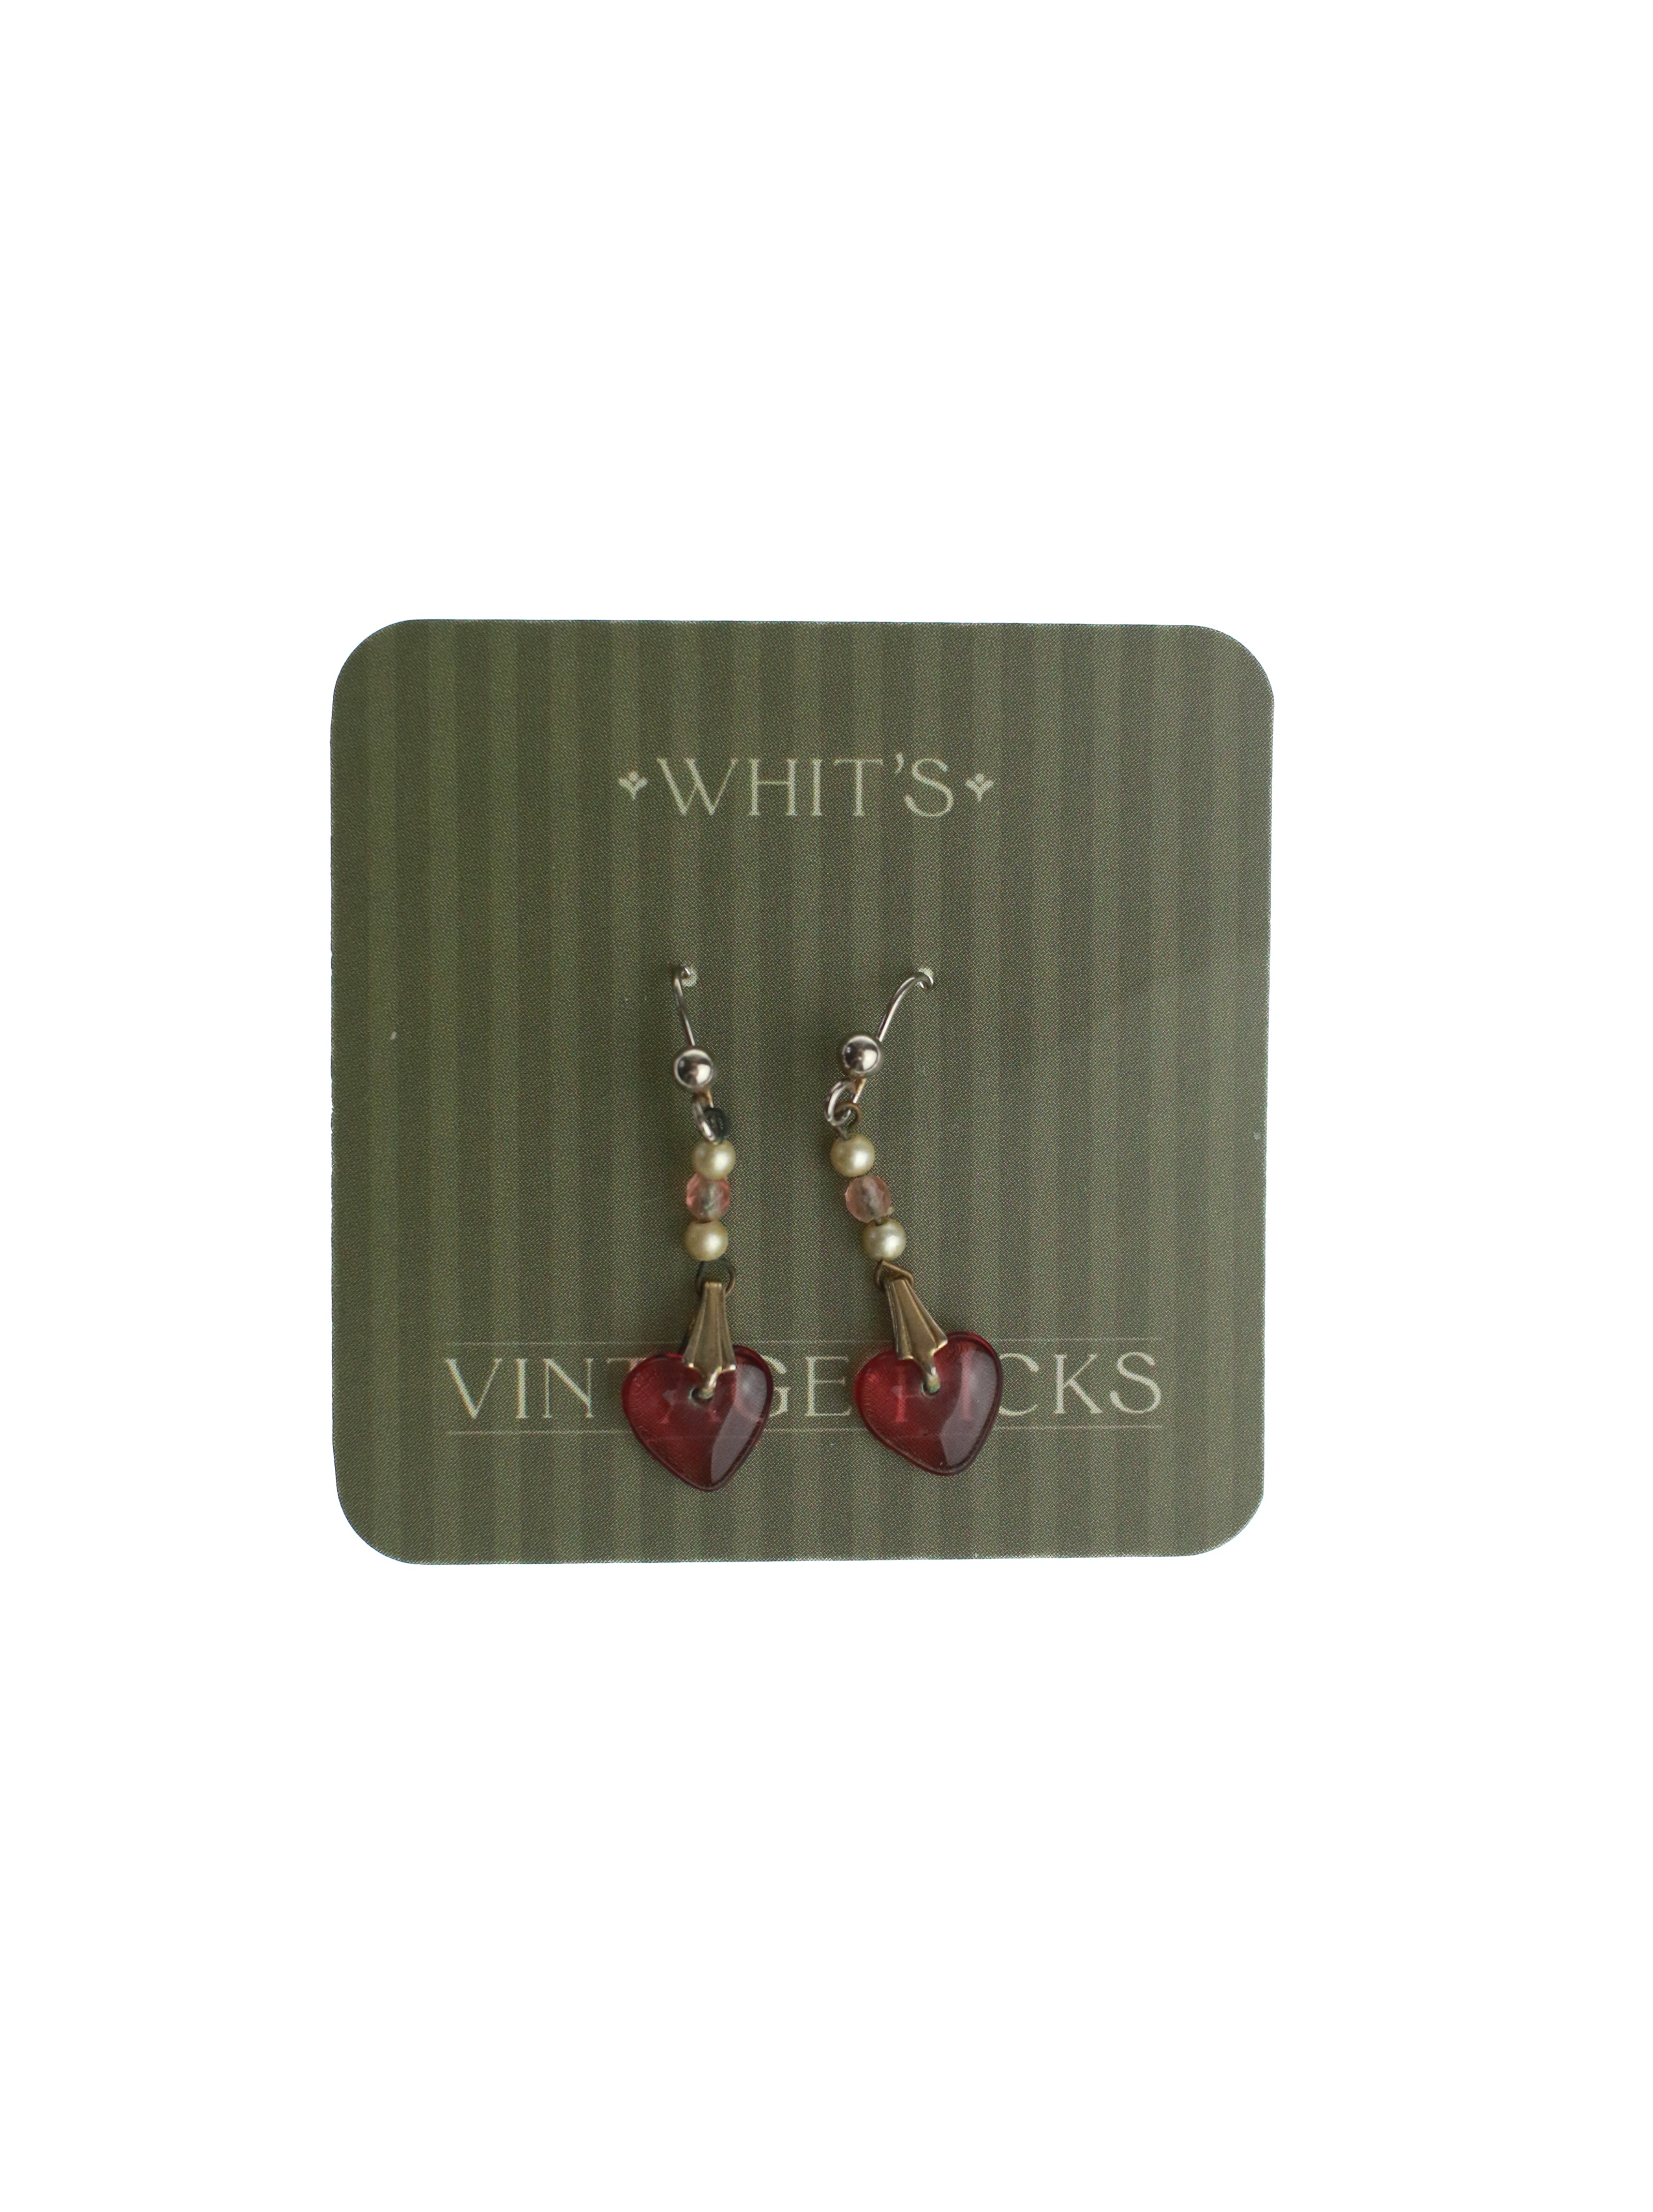 Whit's Vintage Picks- Earrings 185